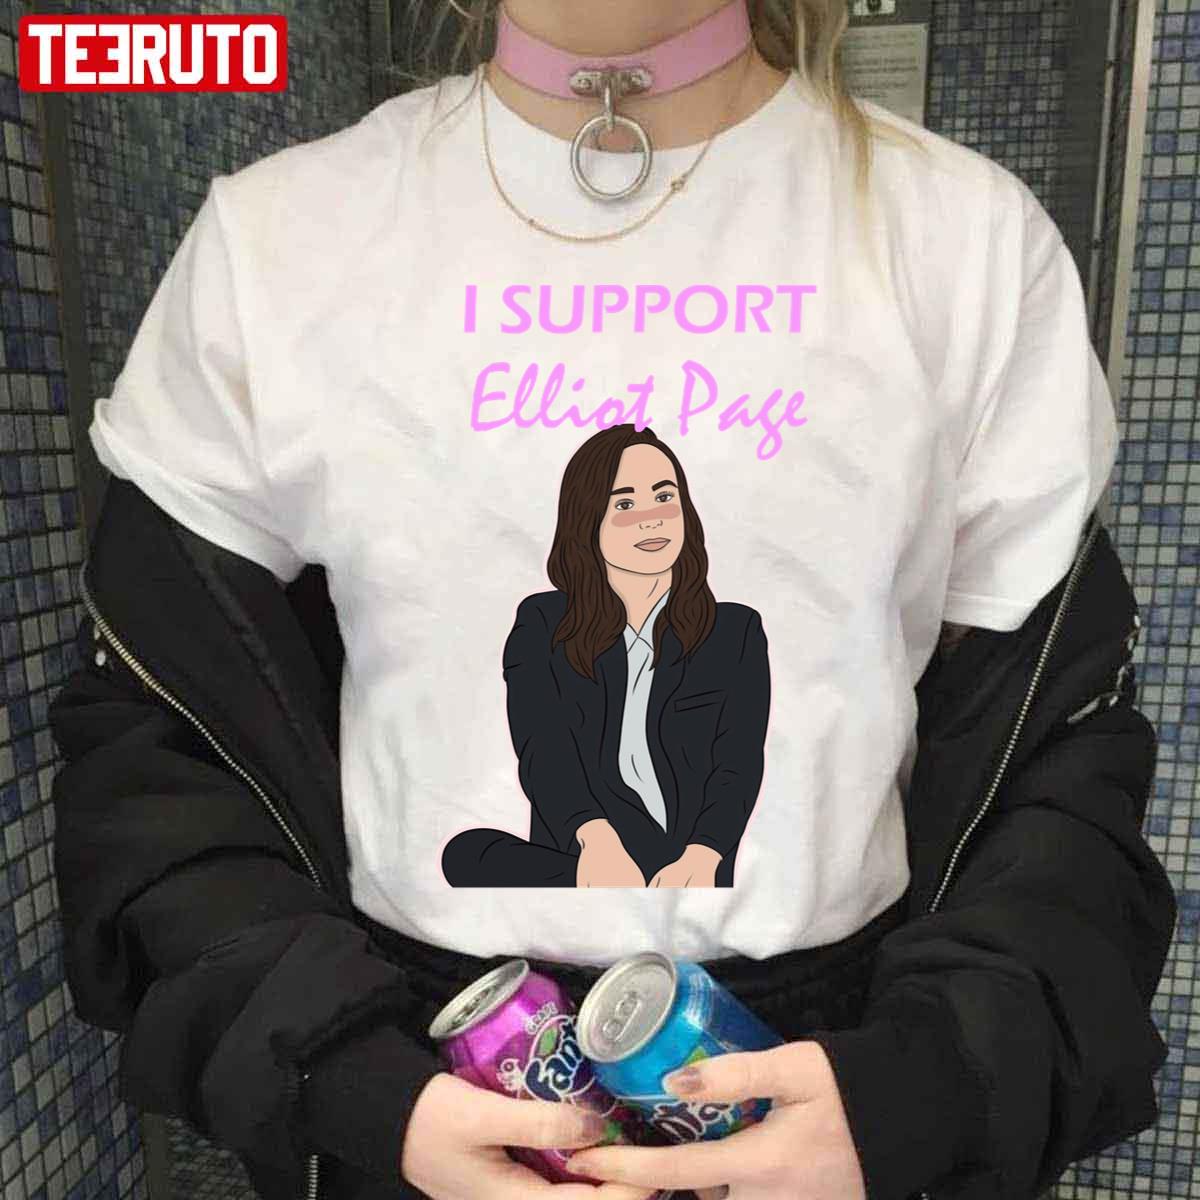 I Support Elliot Page Unisex T-Shirt